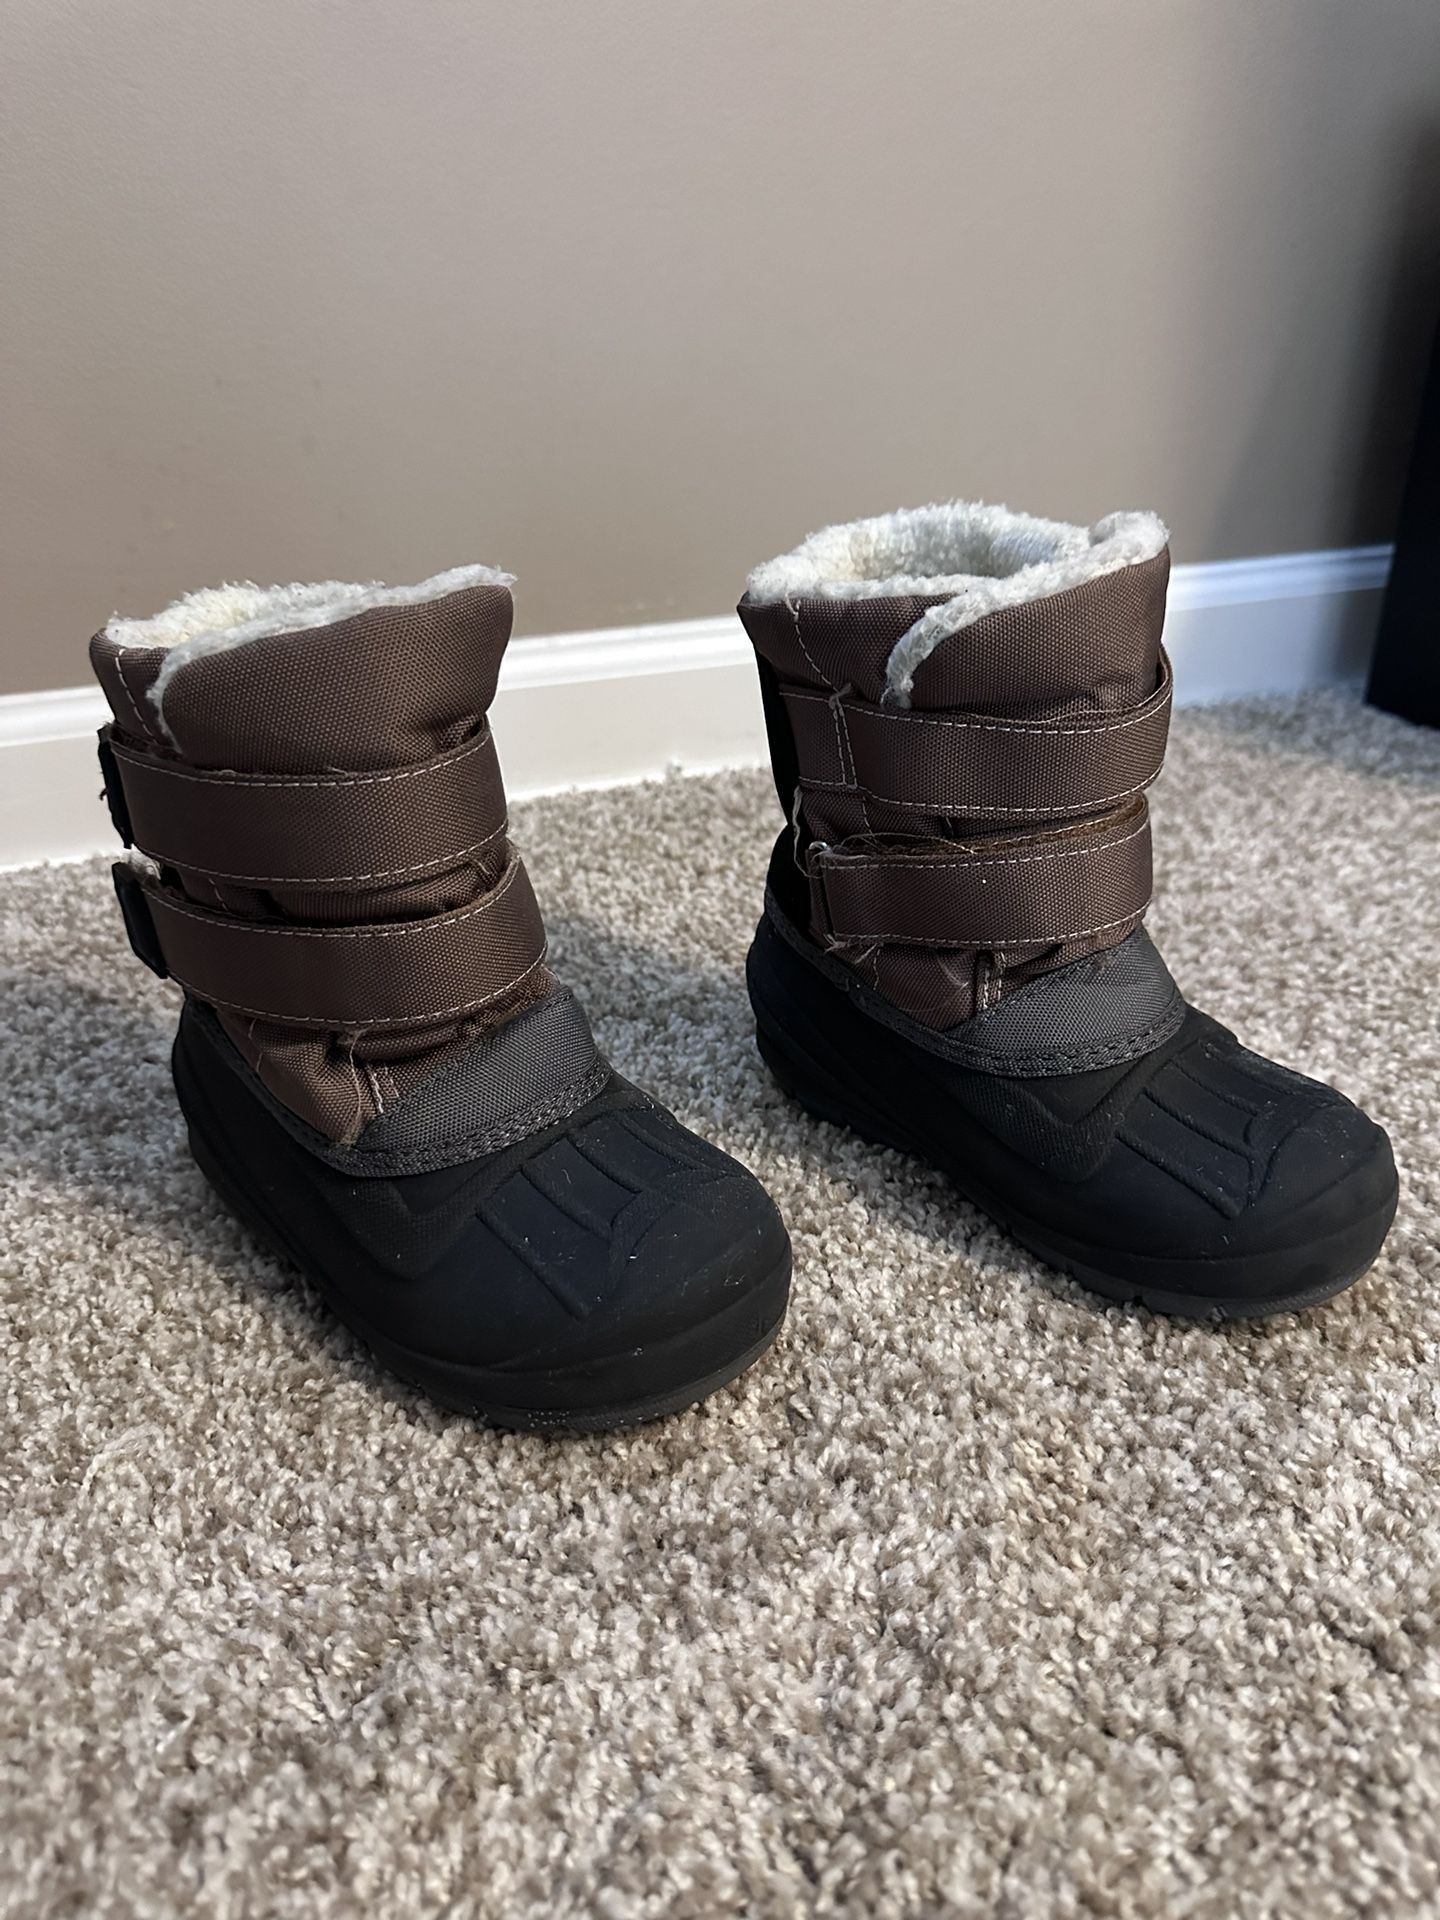 Snow Boots - 9C